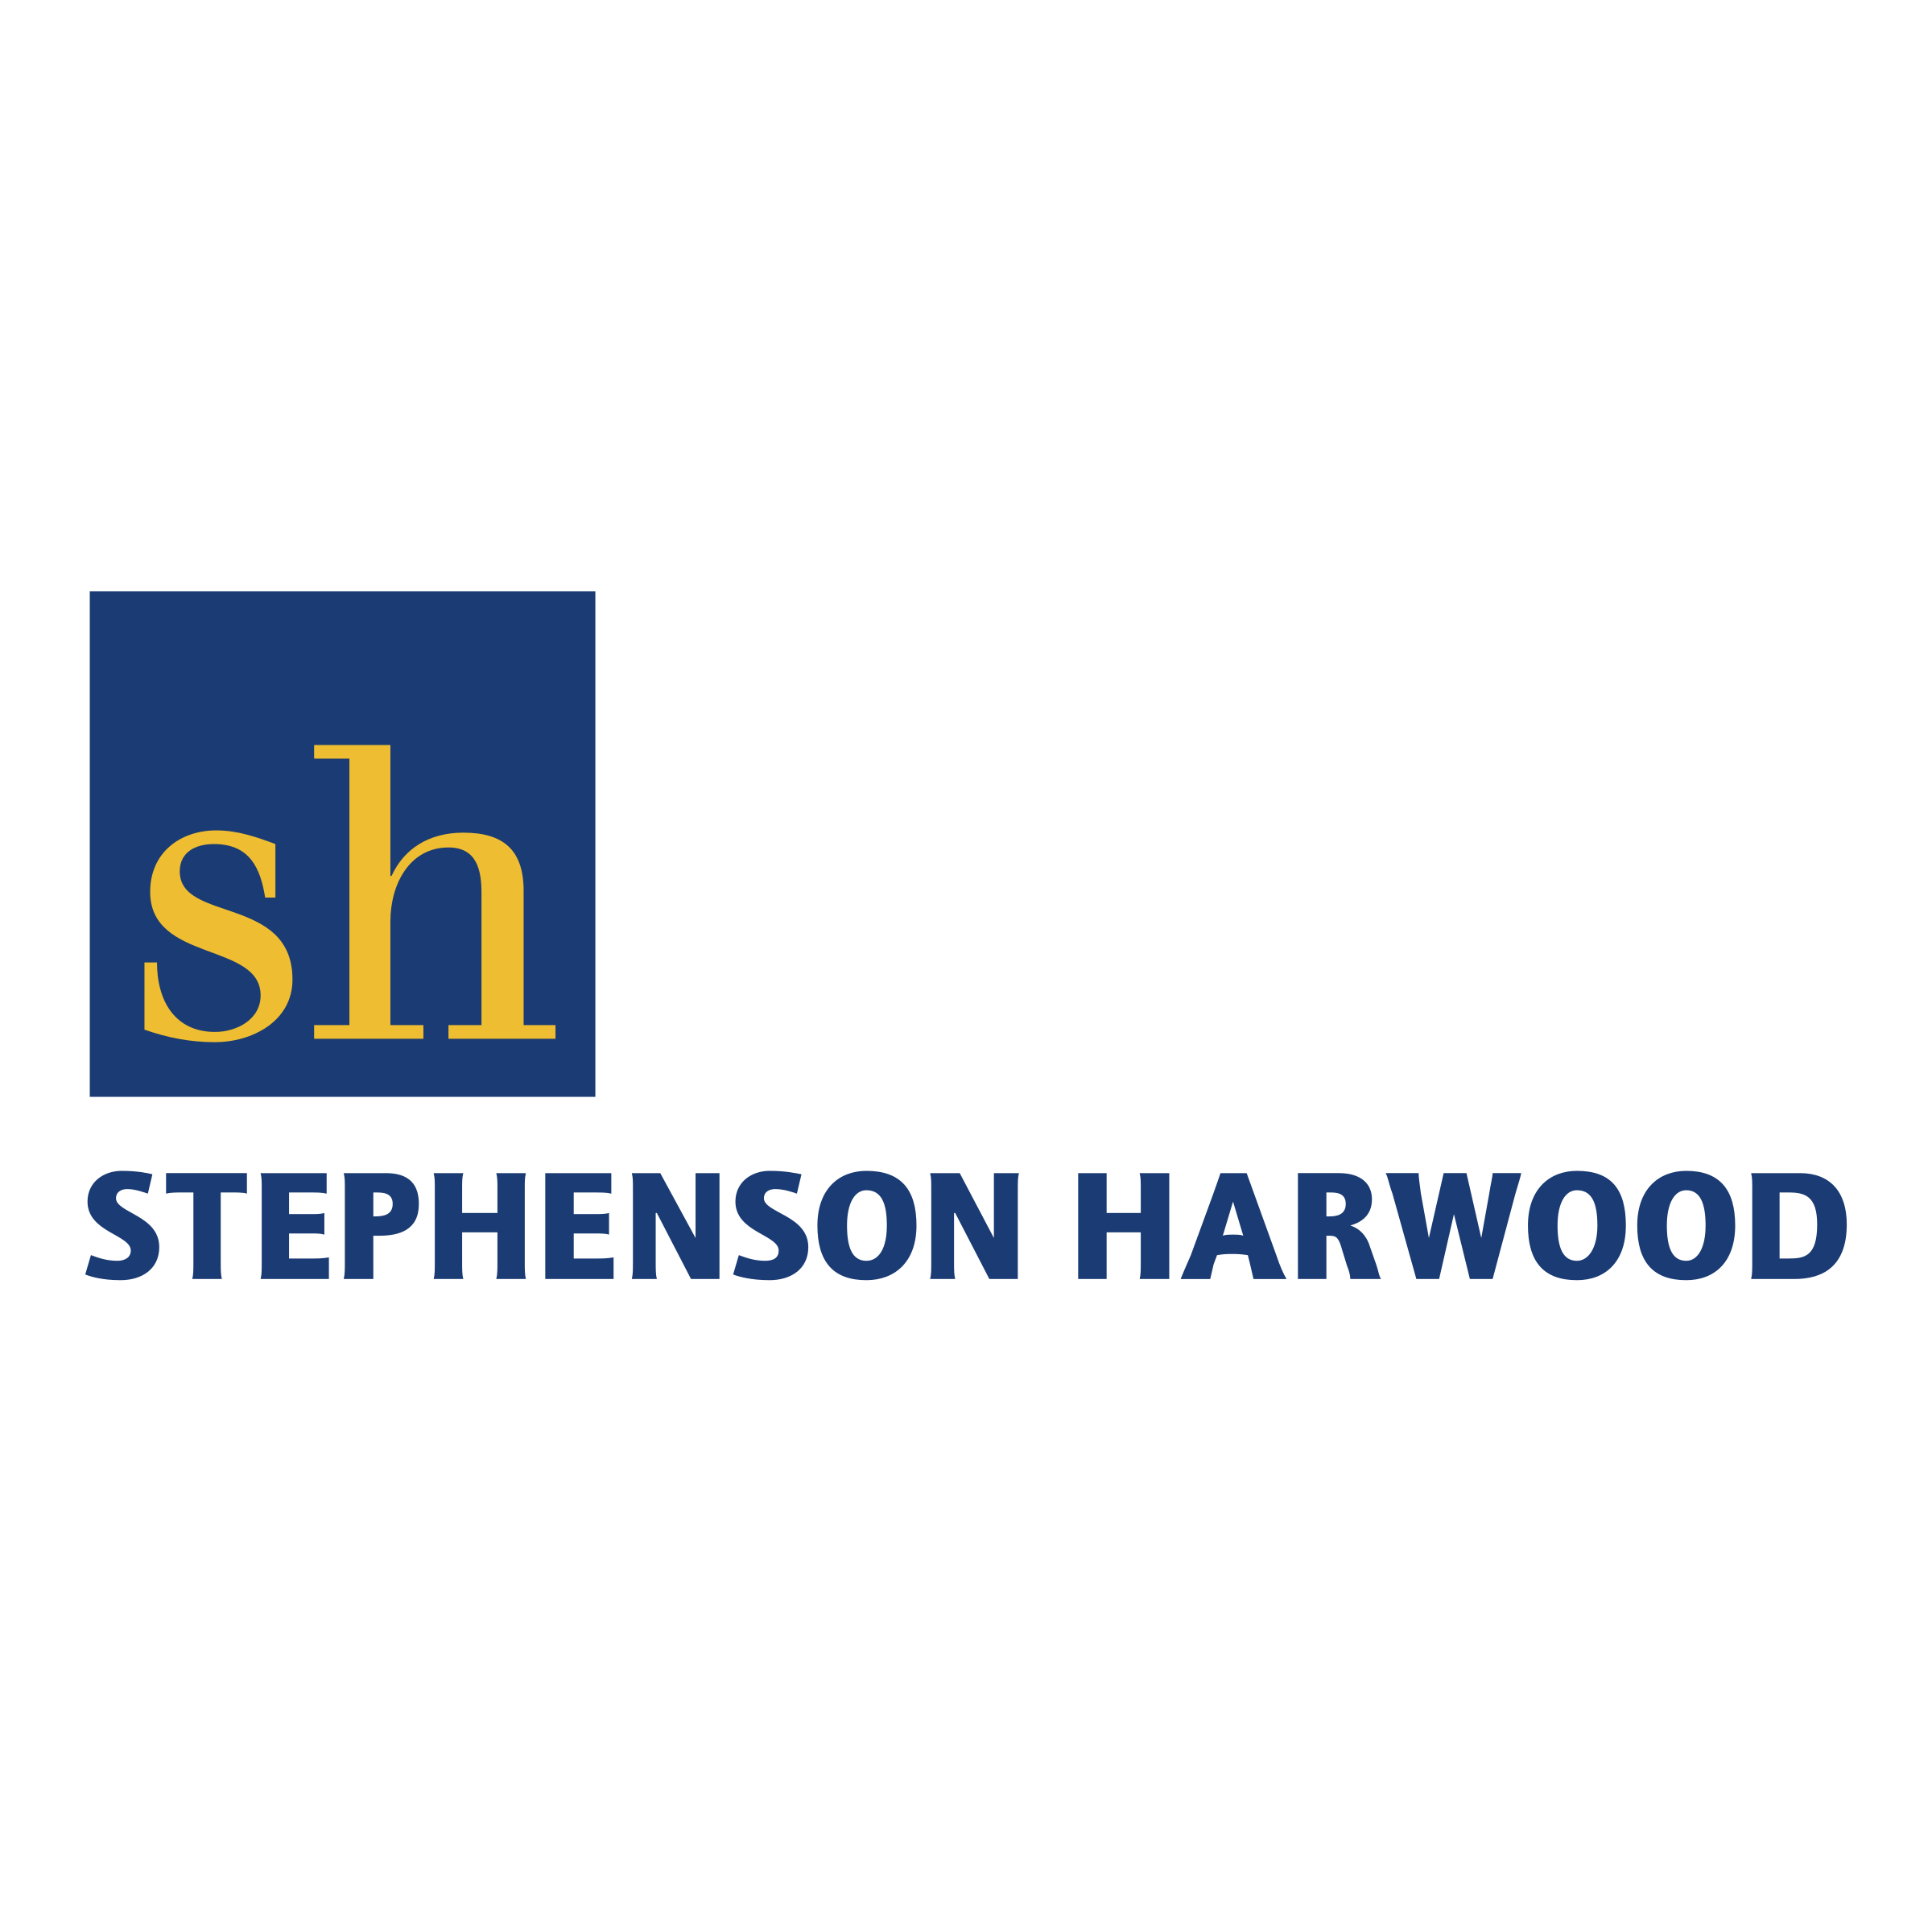 Stephenson Logo - Stephenson Harwood Logo PNG Transparent & SVG Vector